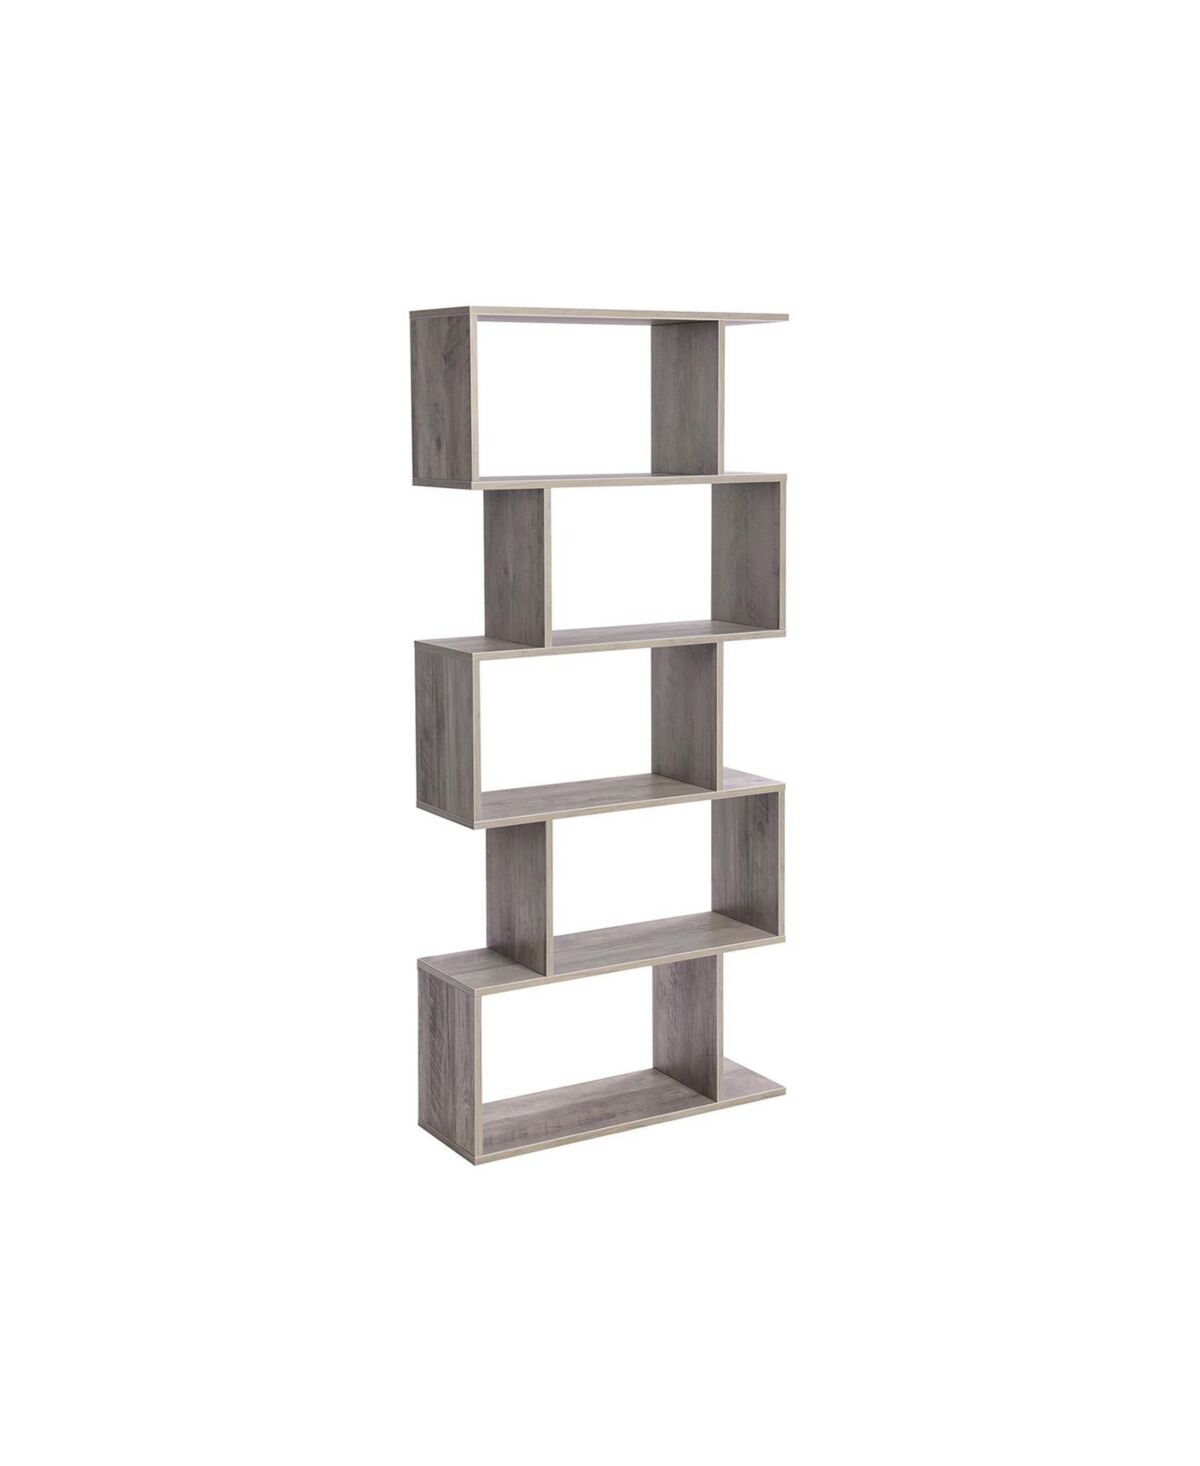 Slickblue Wooden Bookcase, 5-tier Display Shelf, Freestanding Decorative Storage Shelving Bookshelf - Greige